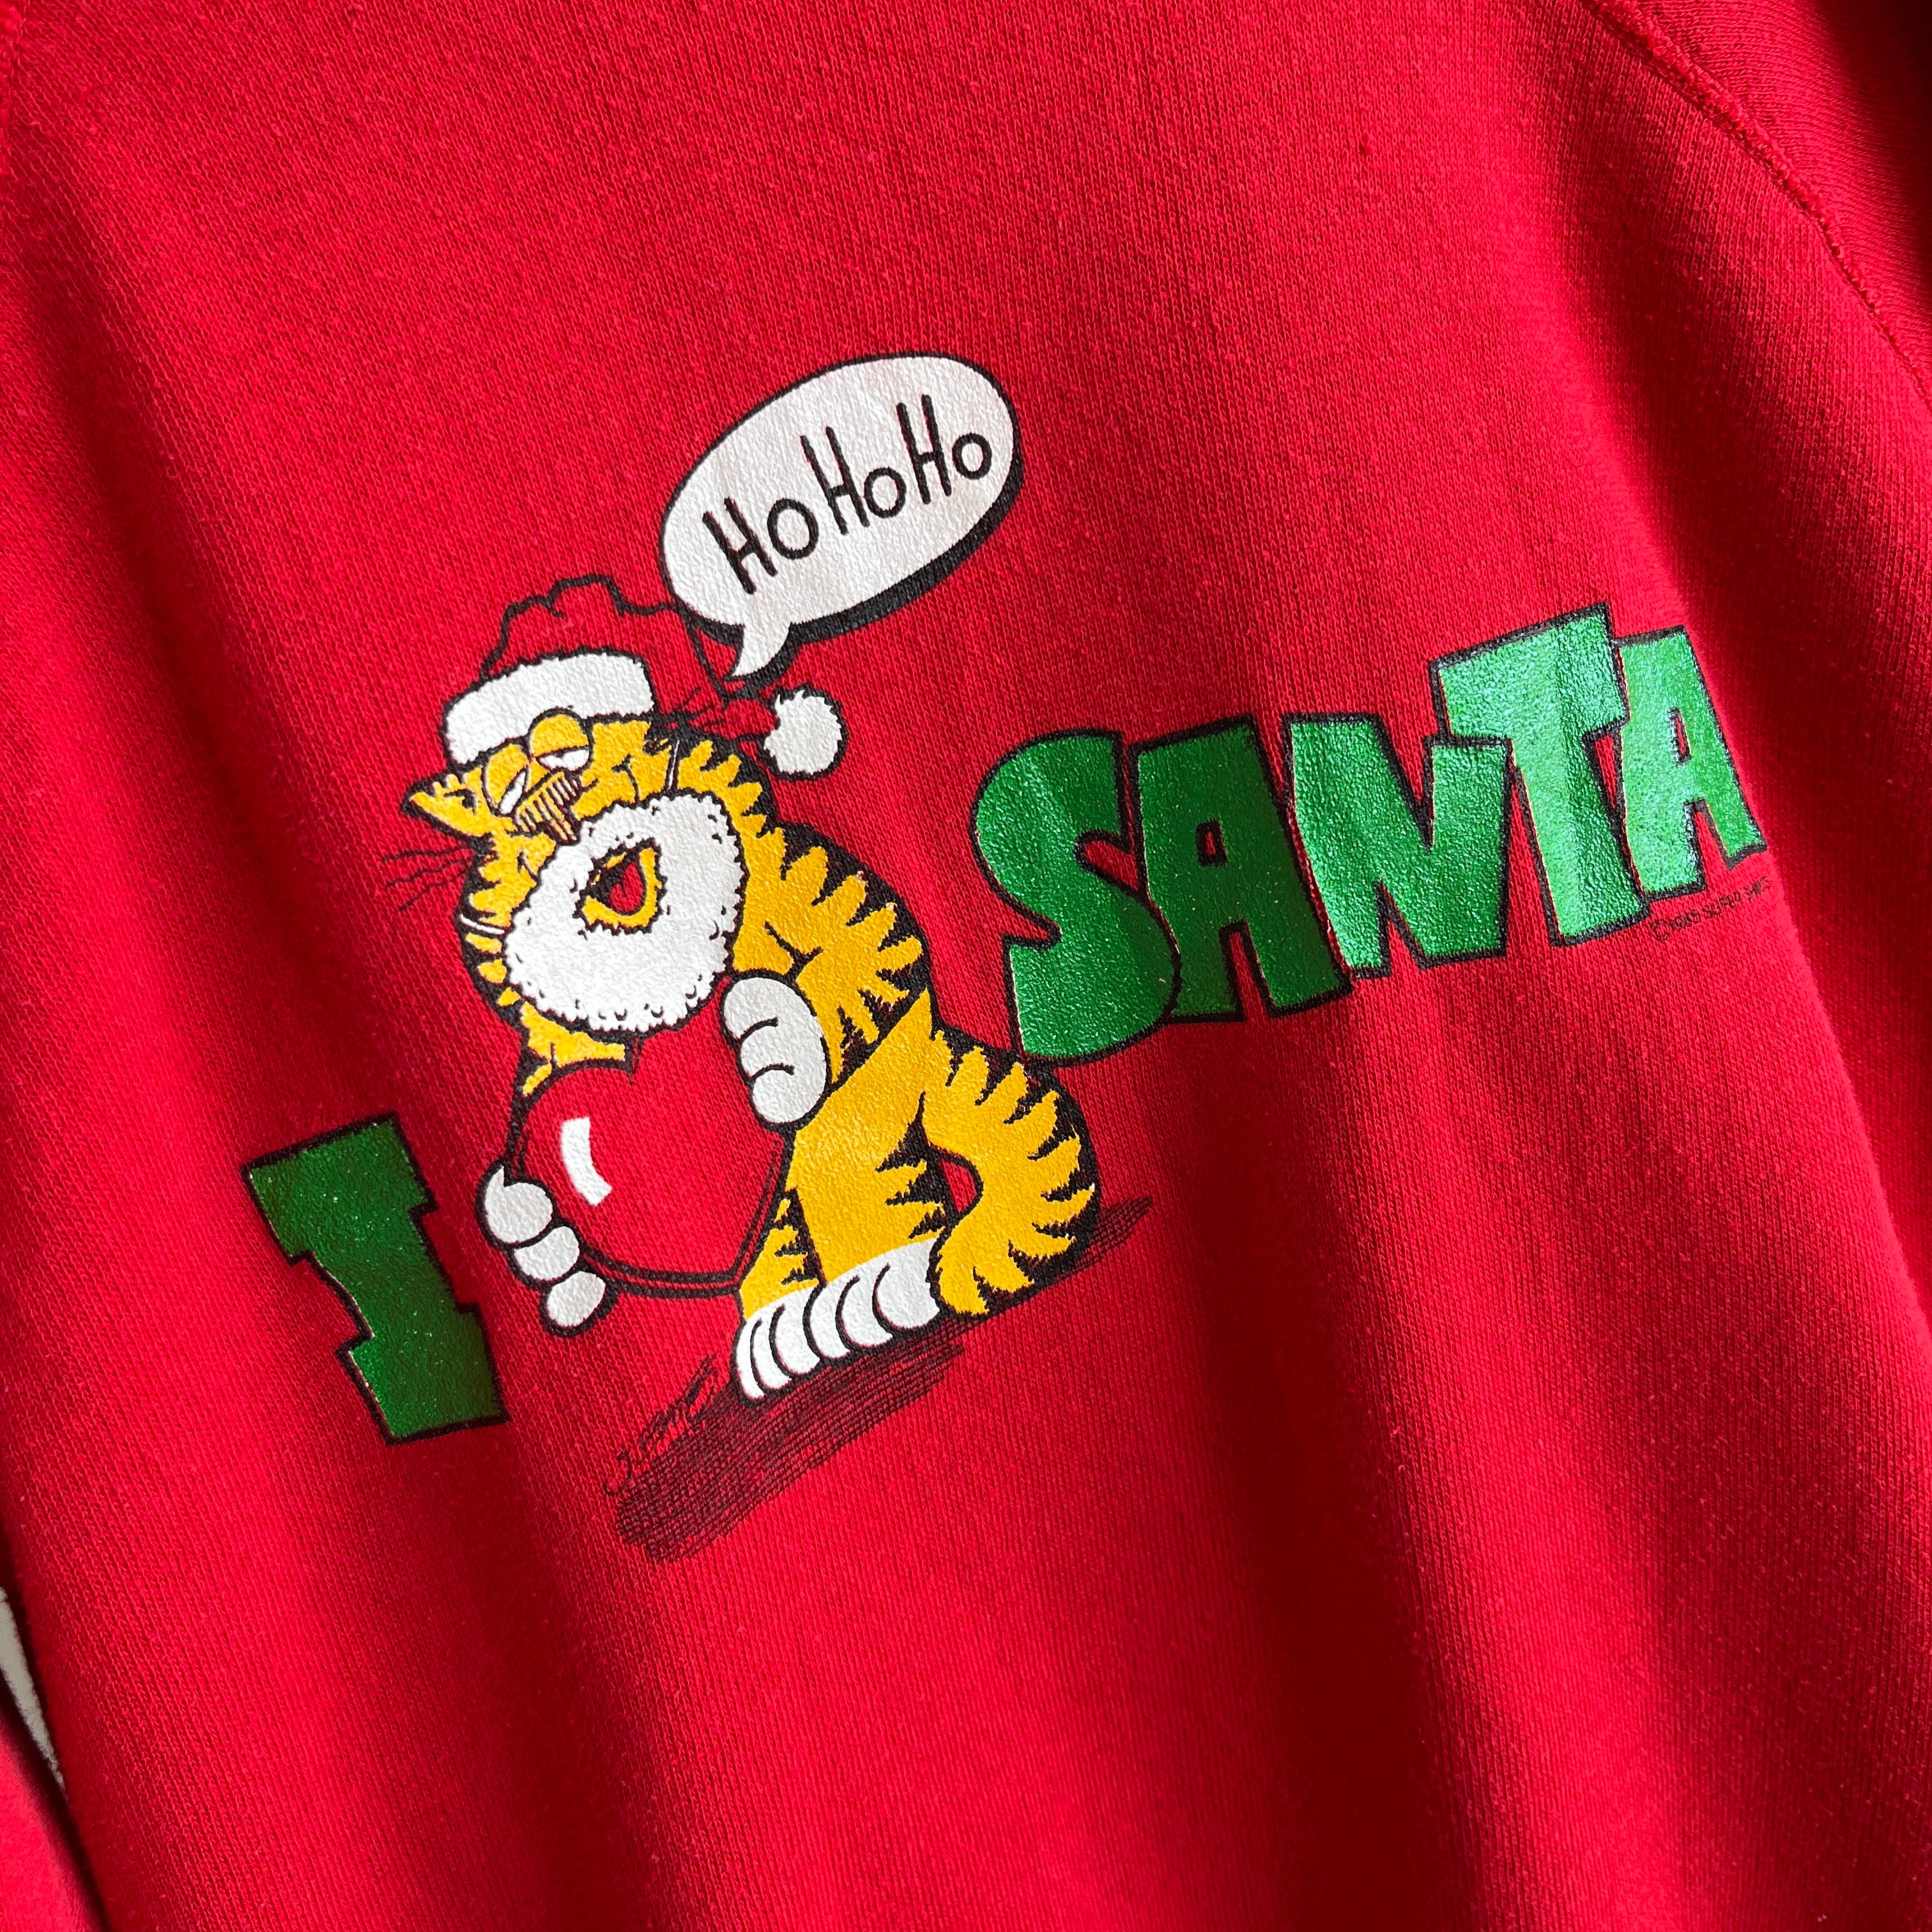 1985 Garfield as Santa Sweatshirt - Collectible